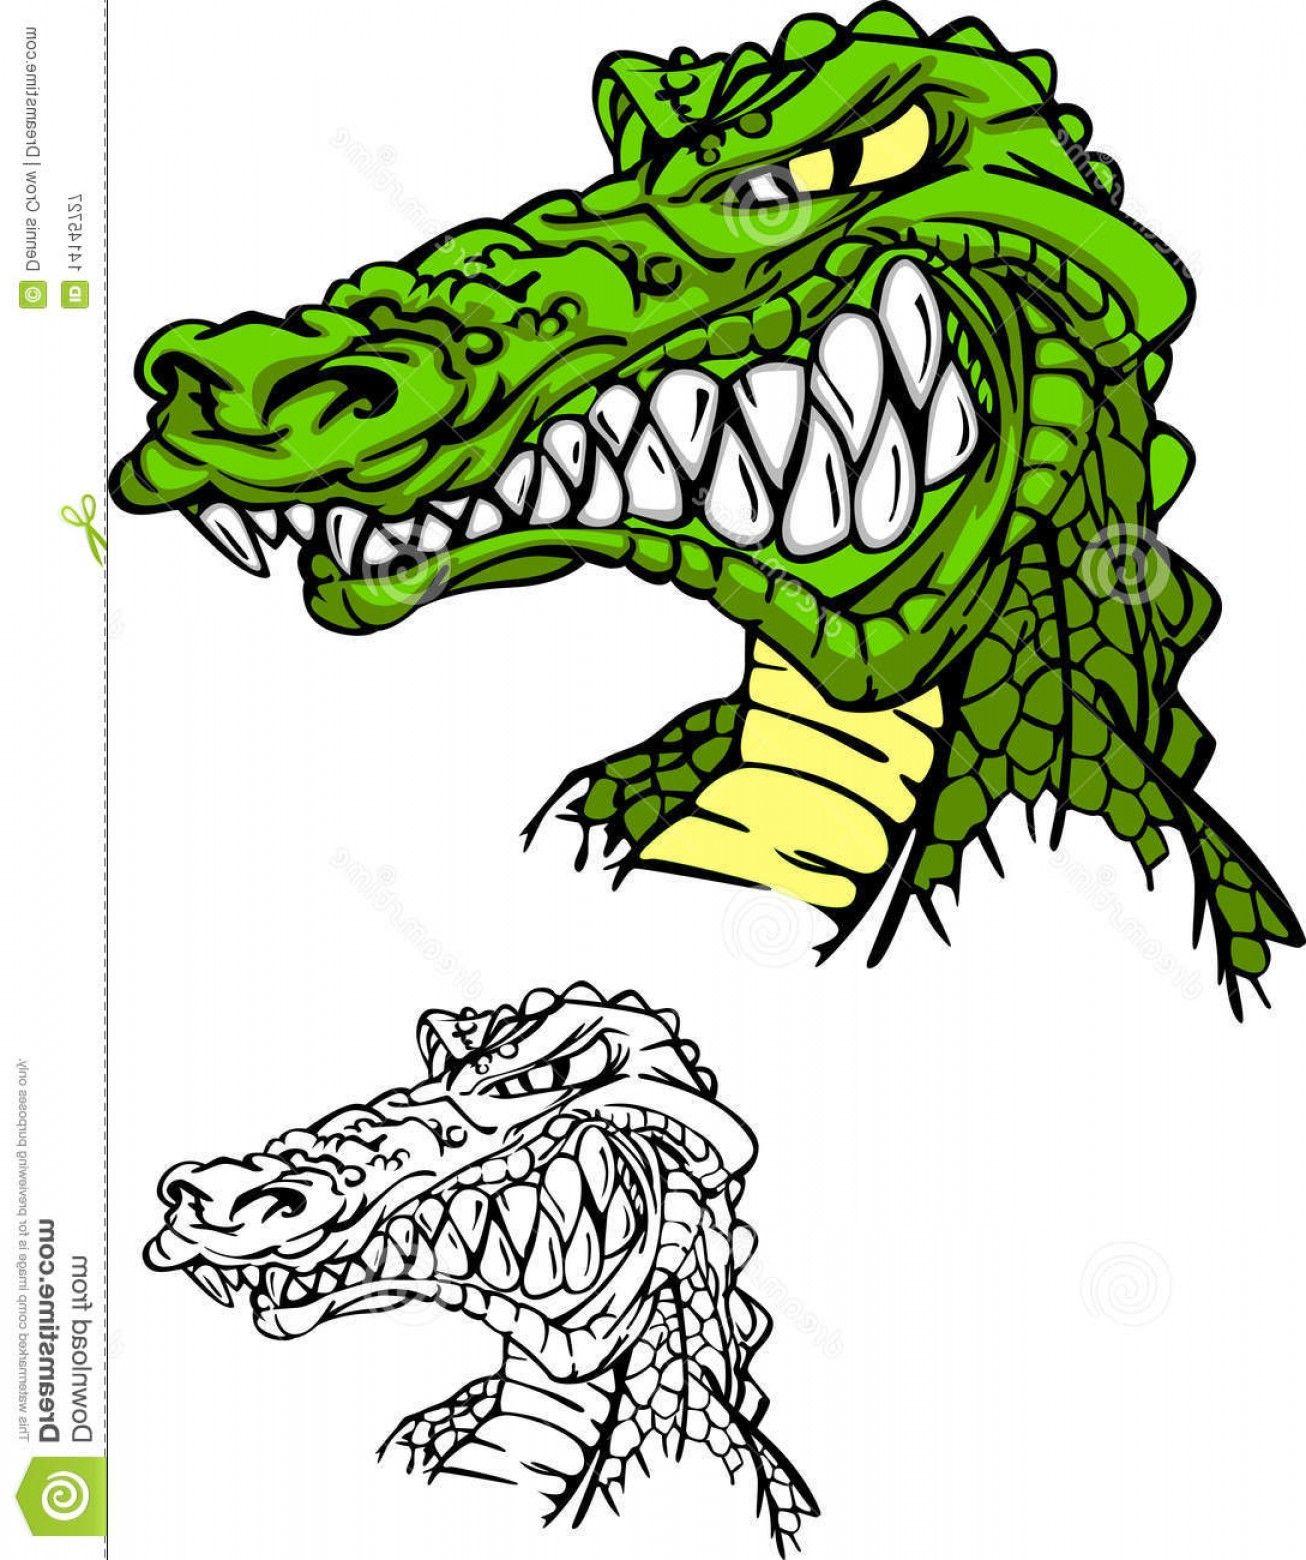 Alligator Head Logo - Royalty Free Stock Photography Alligator Gator Head Logo Image ...